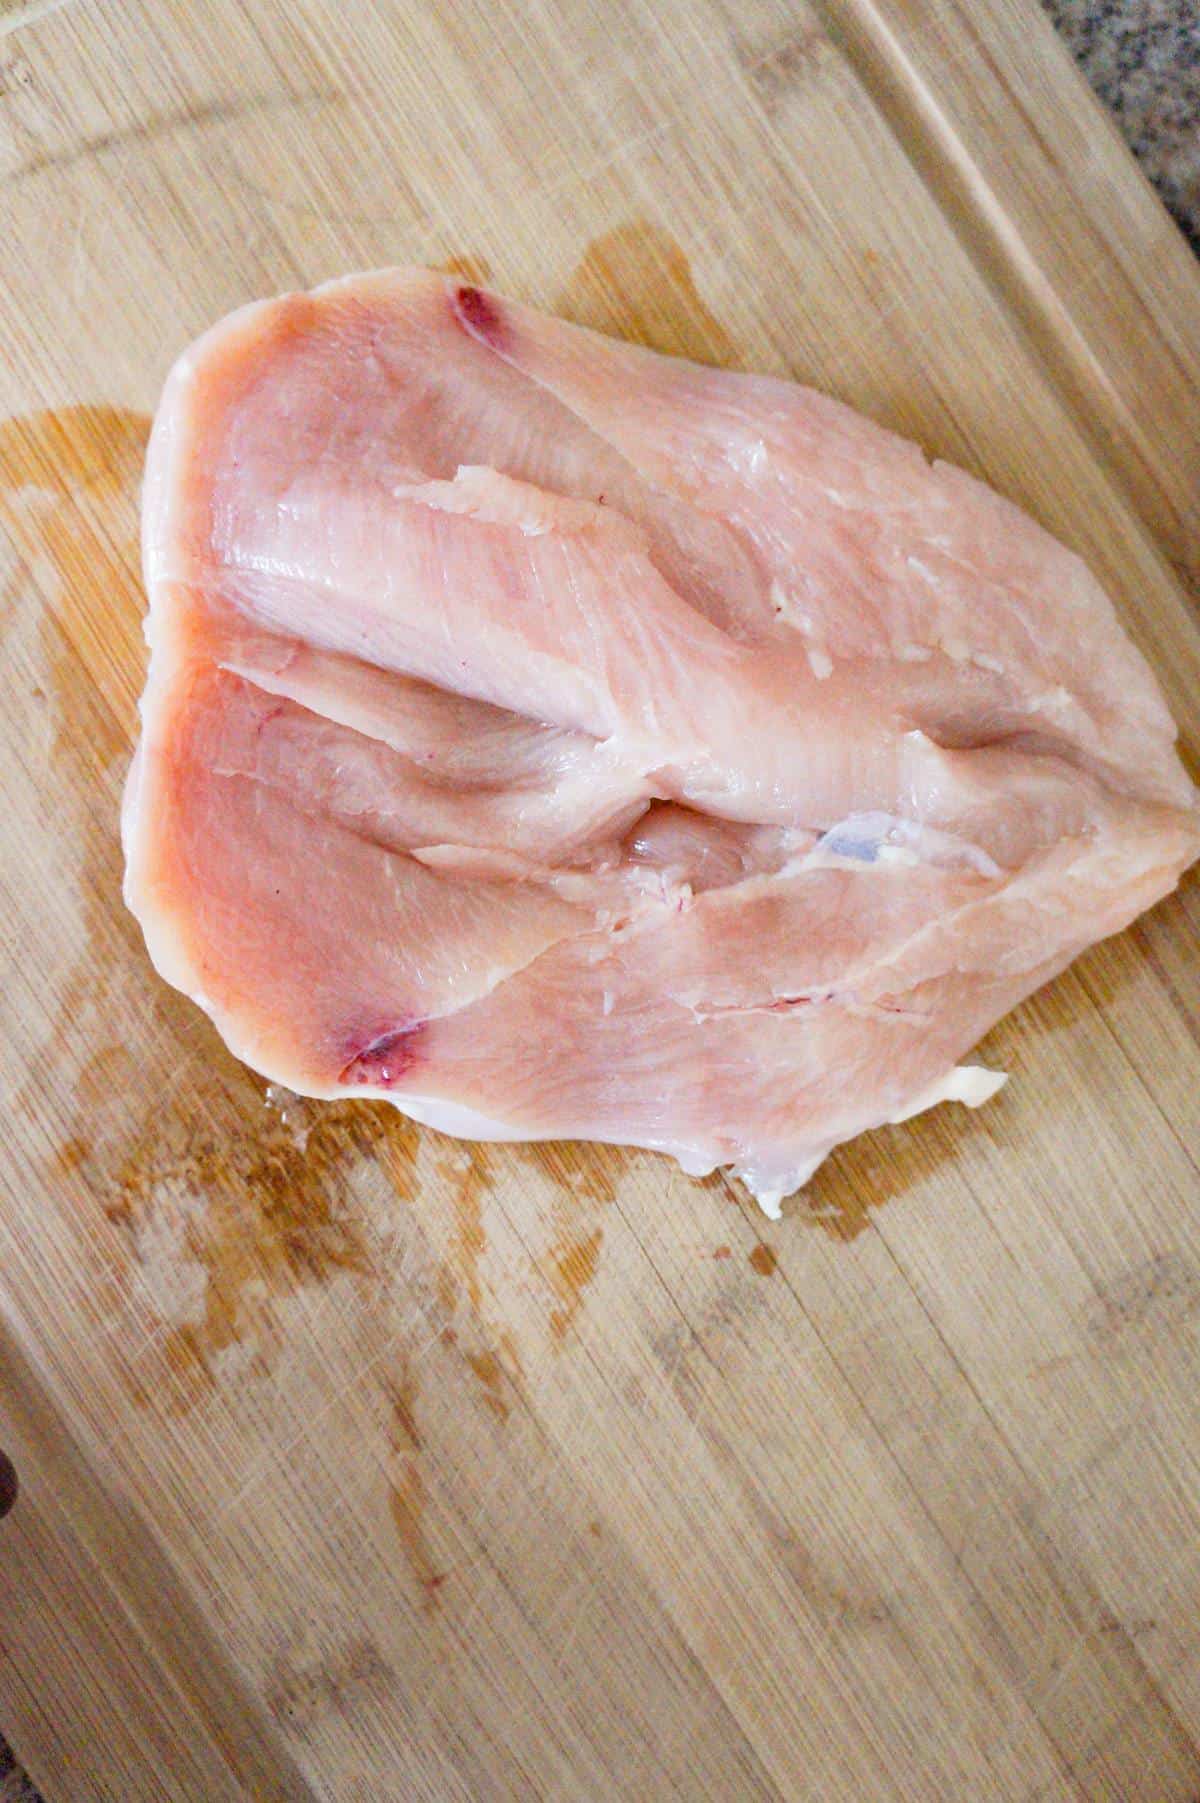 raw chicken breast sliced open on a cutting board